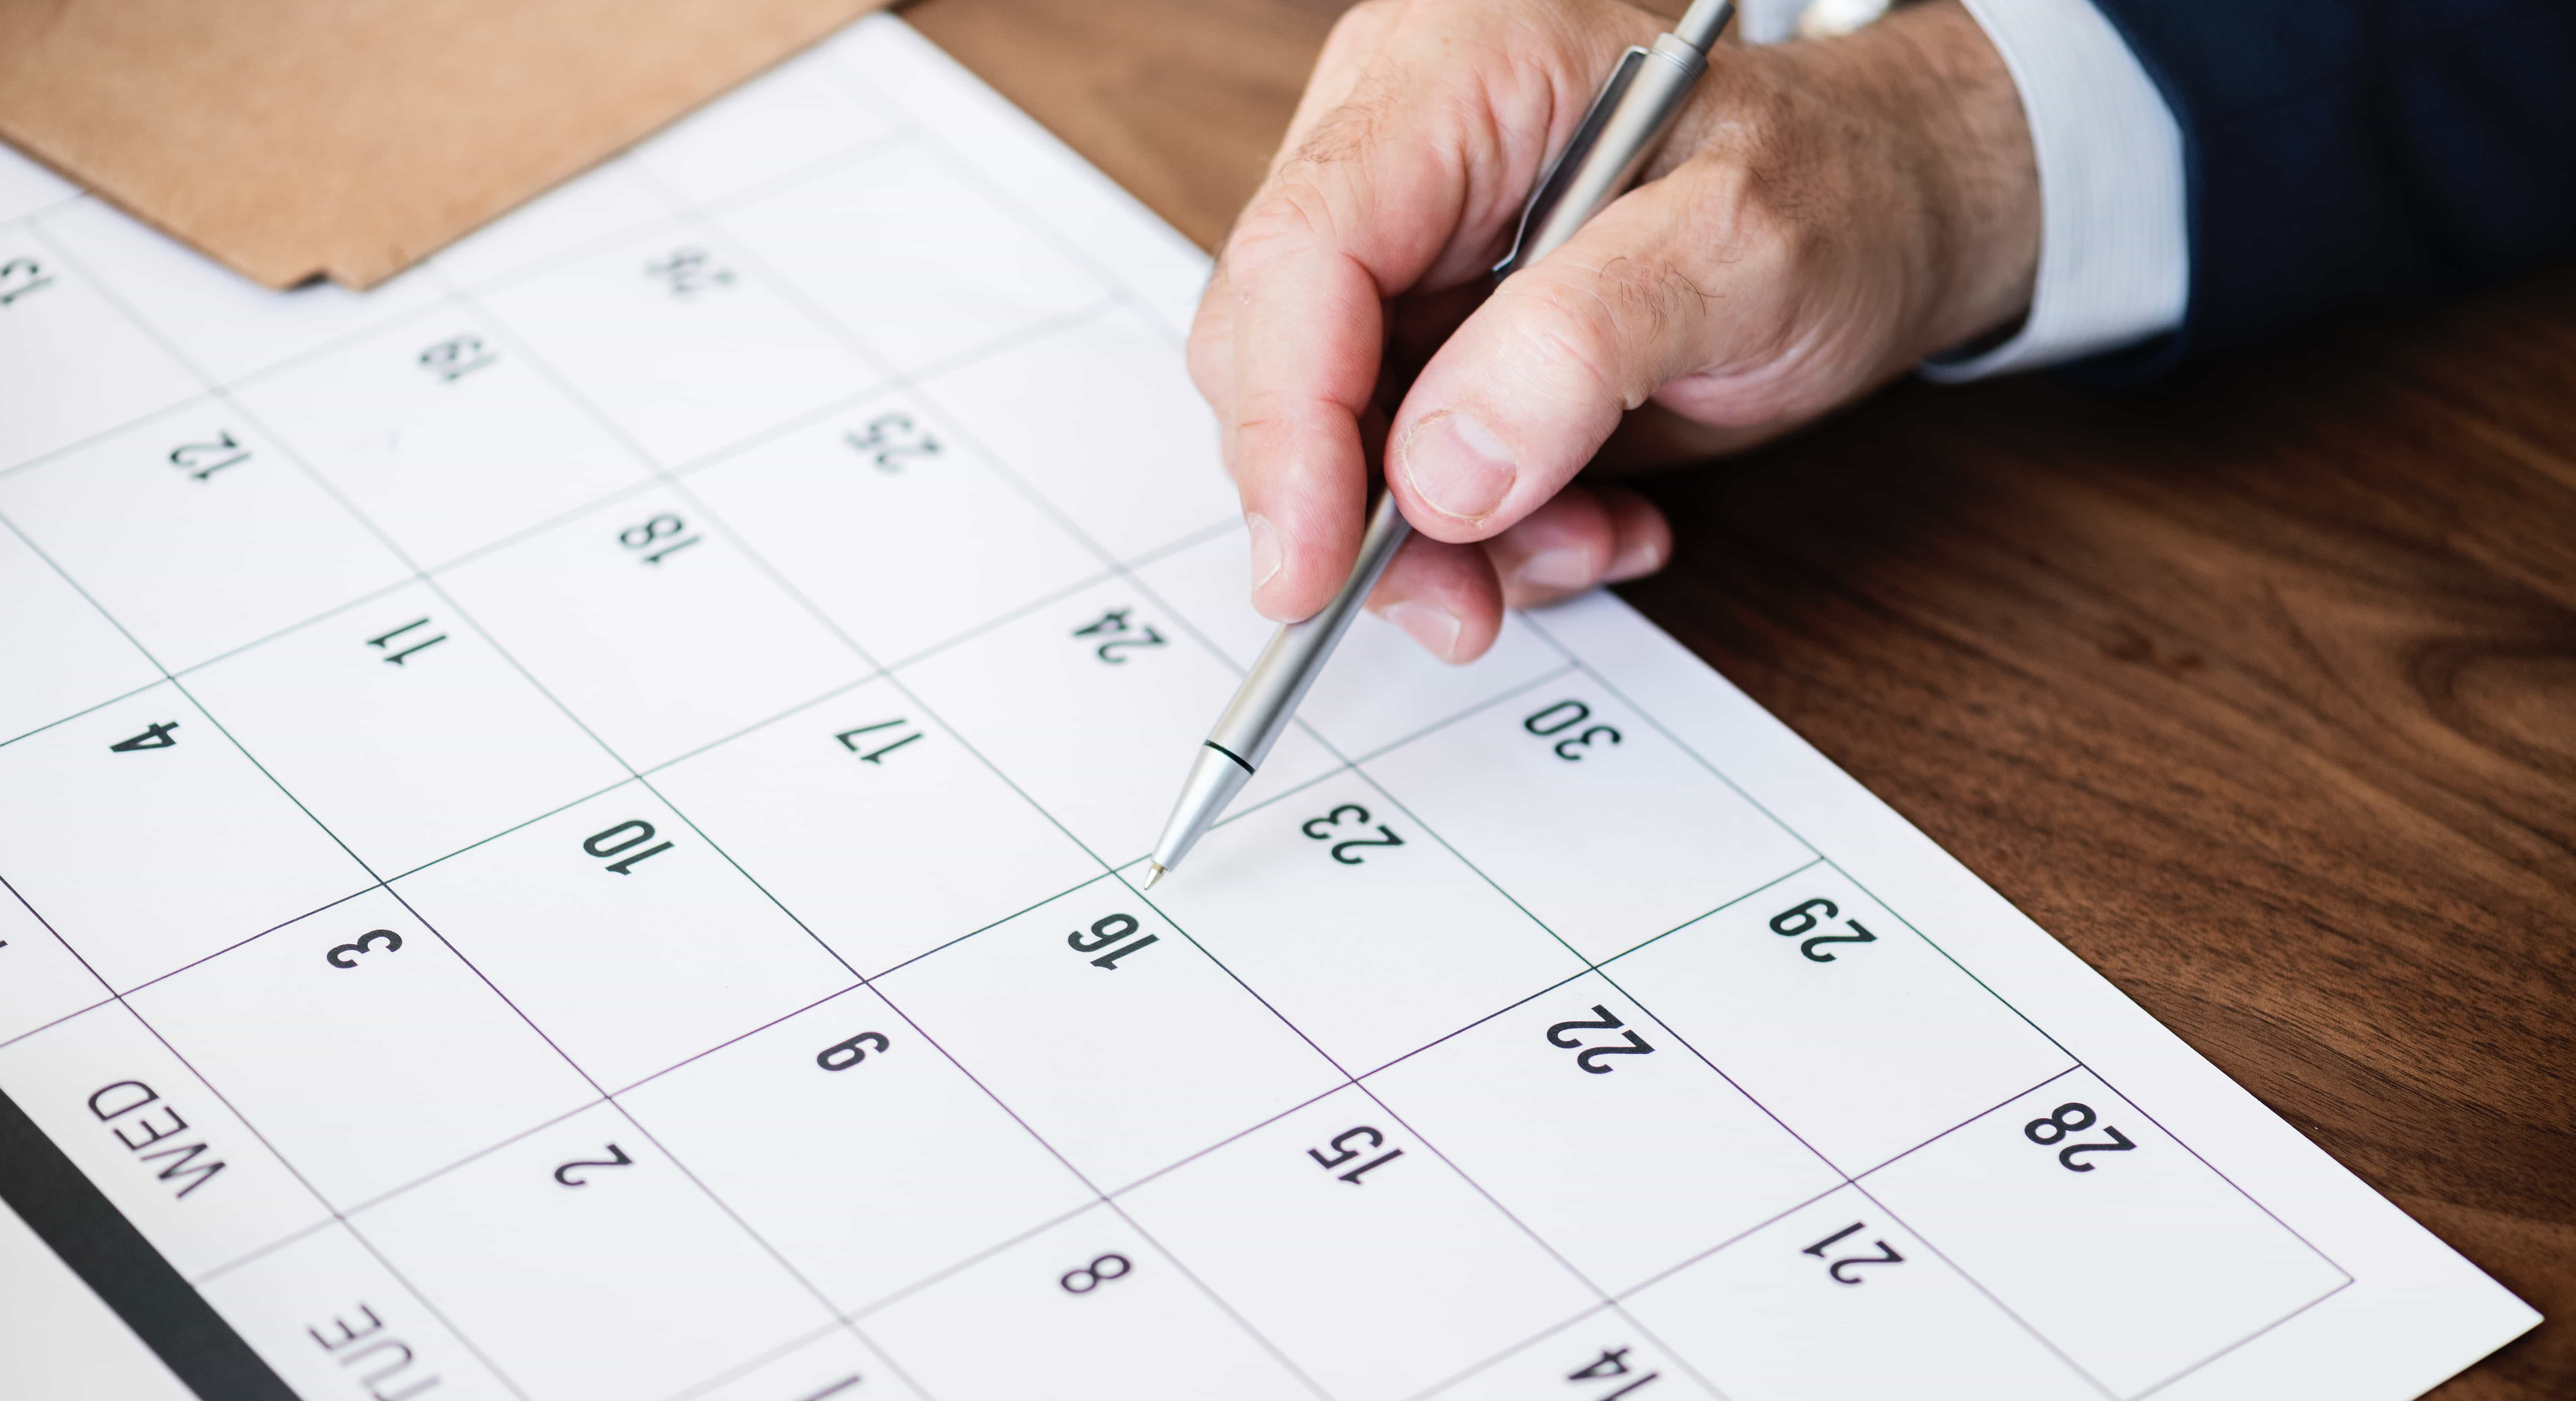 Selecting booking dates on calendar